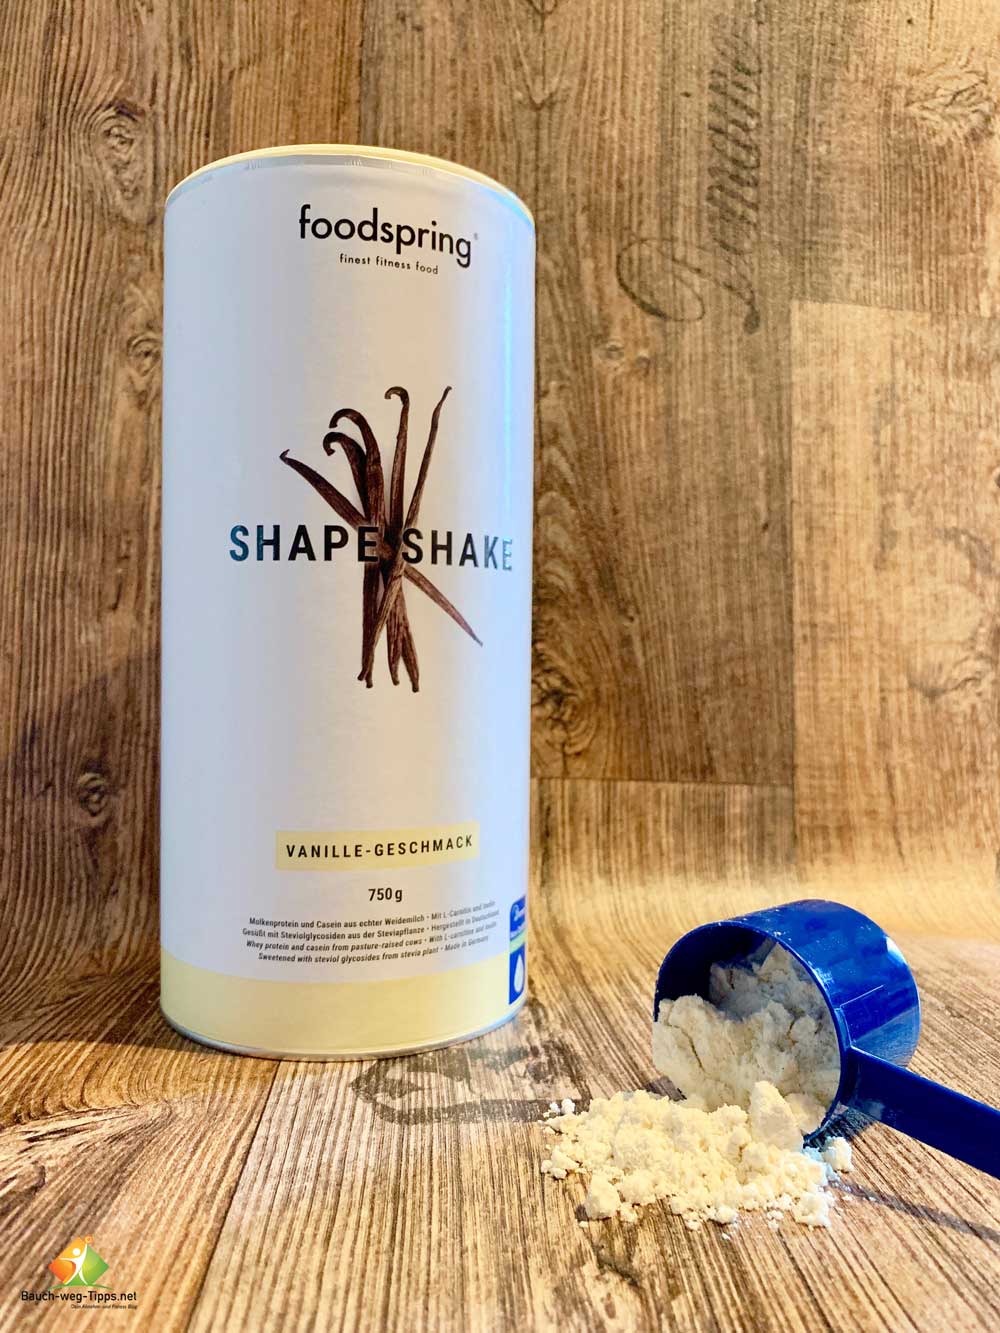 Foodspring Shape Shake Pulver